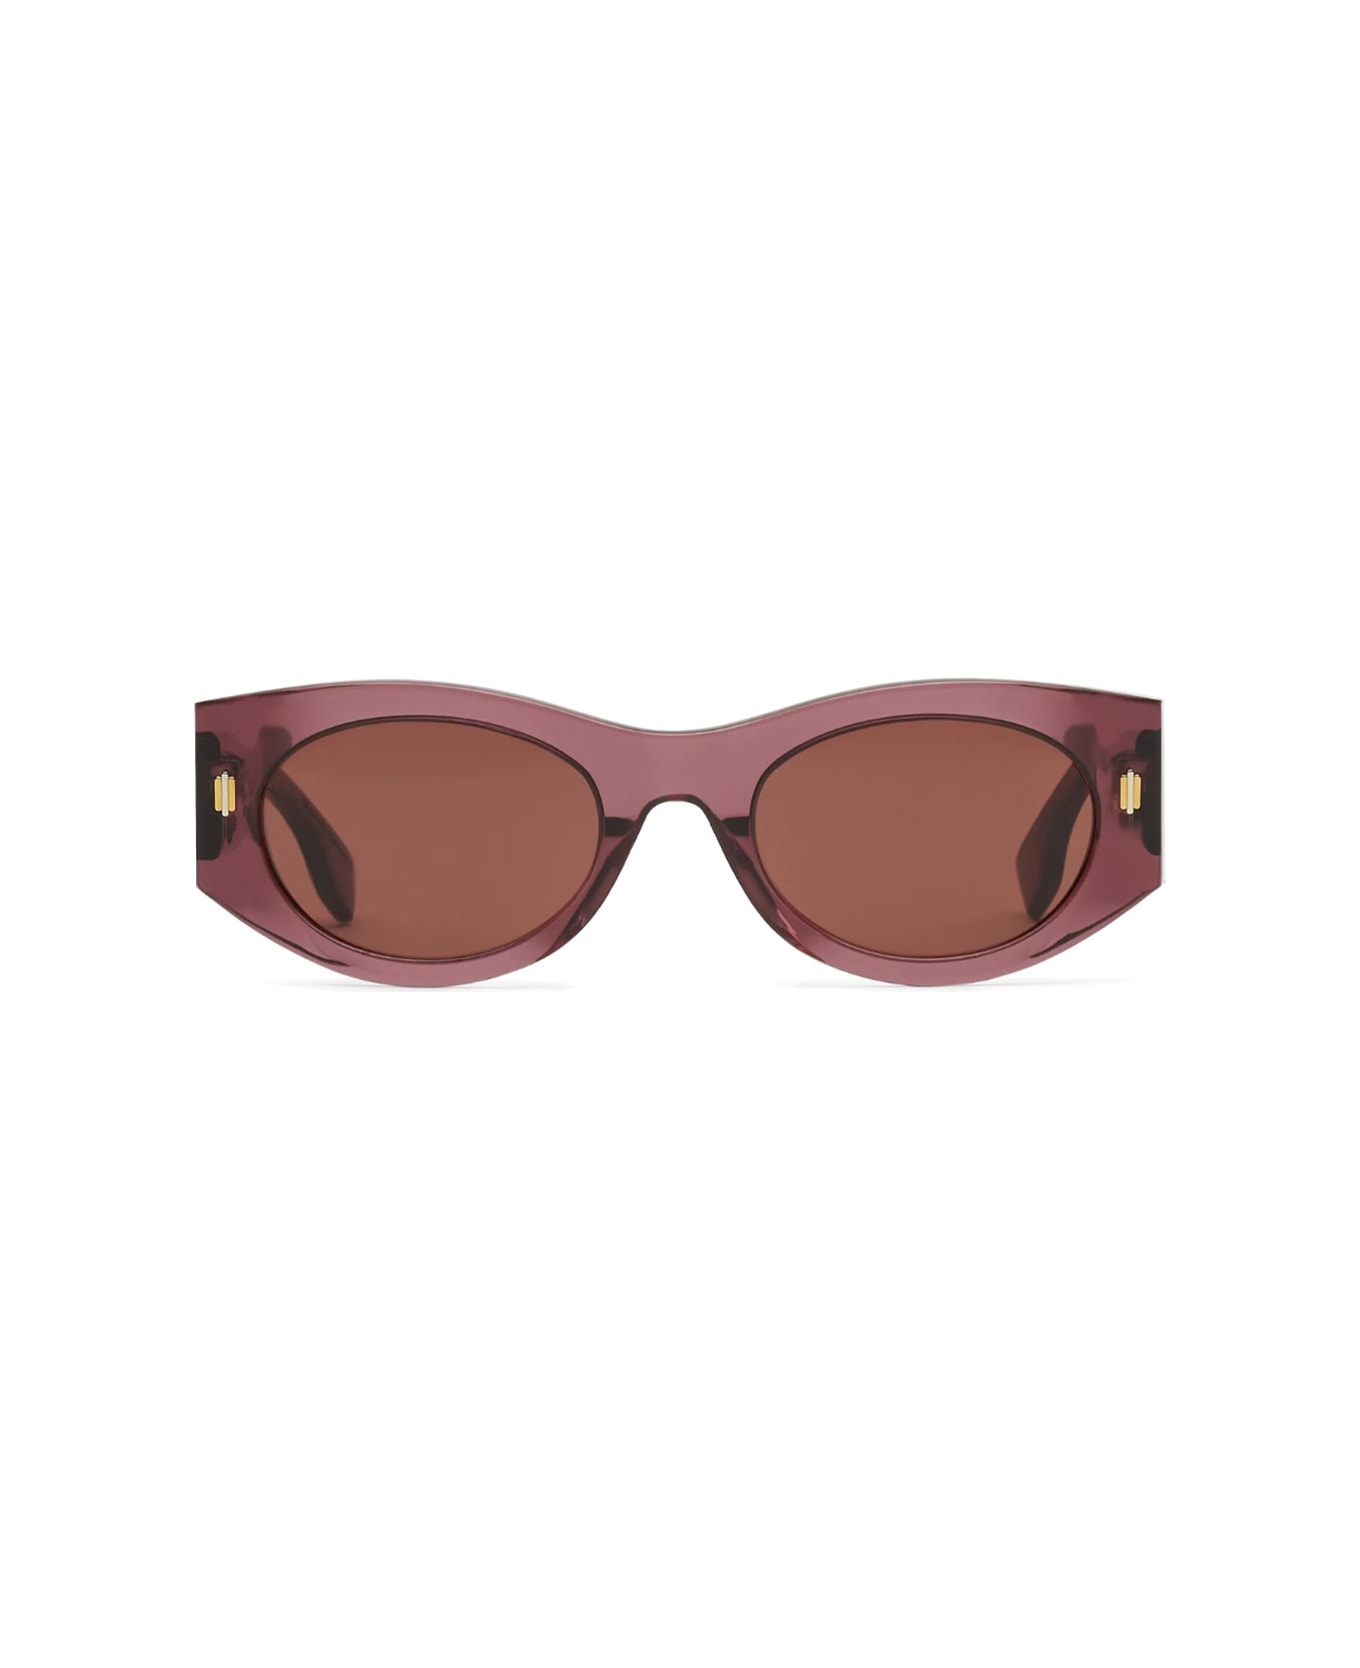 Fendi Eyewear Fe40125i 81s Sunglasses - Viola サングラス